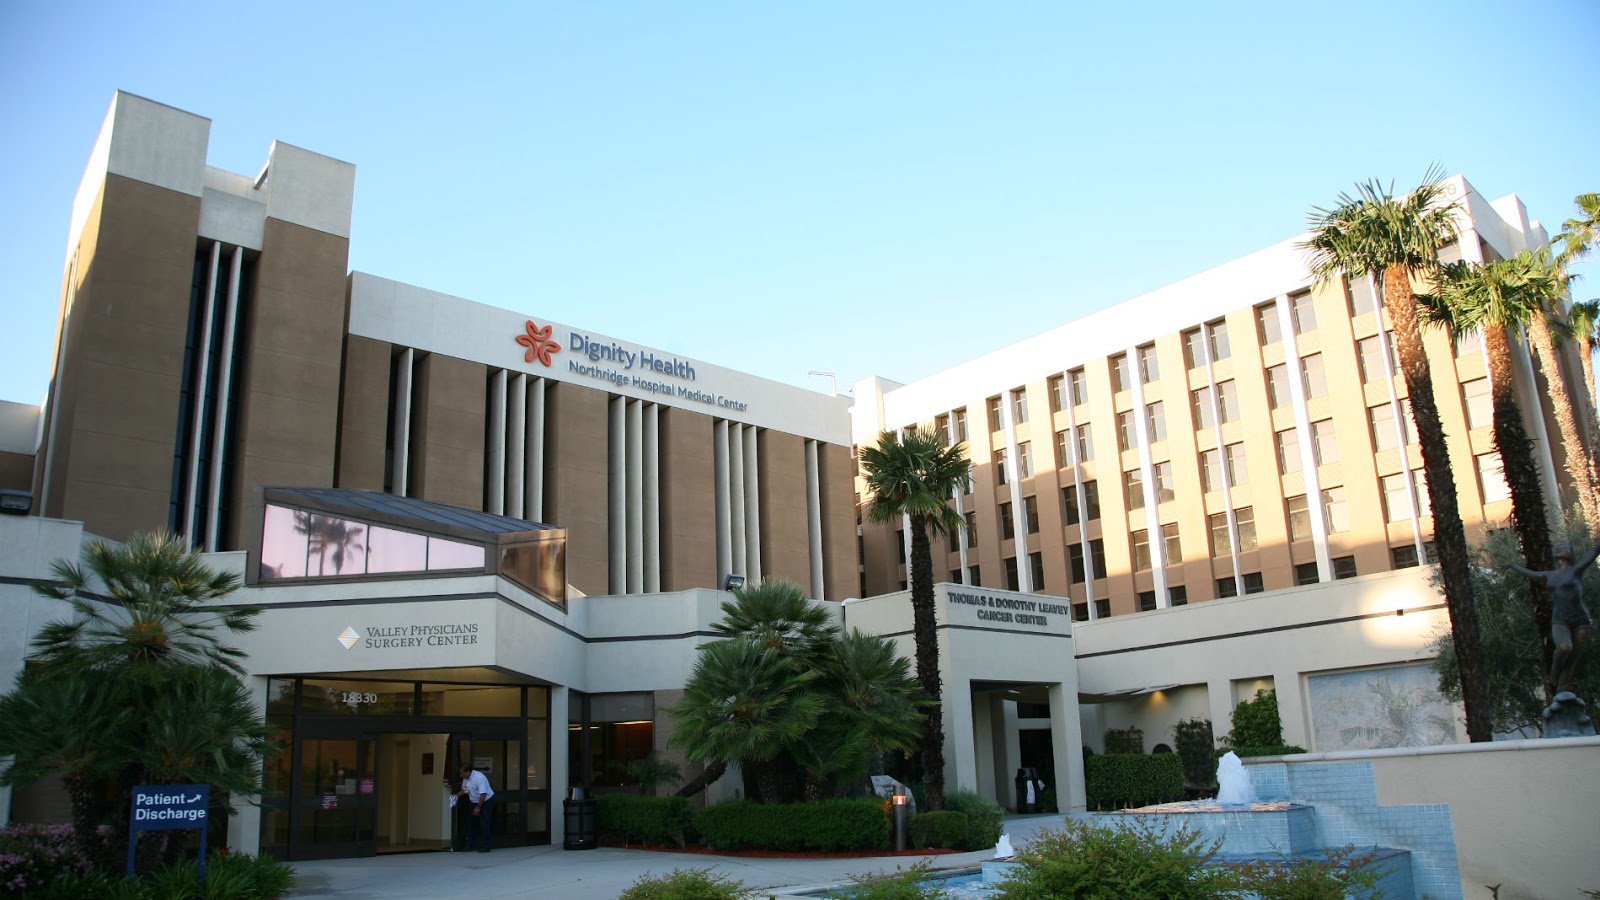 Dignity Health Northridge Hospital Medical Center